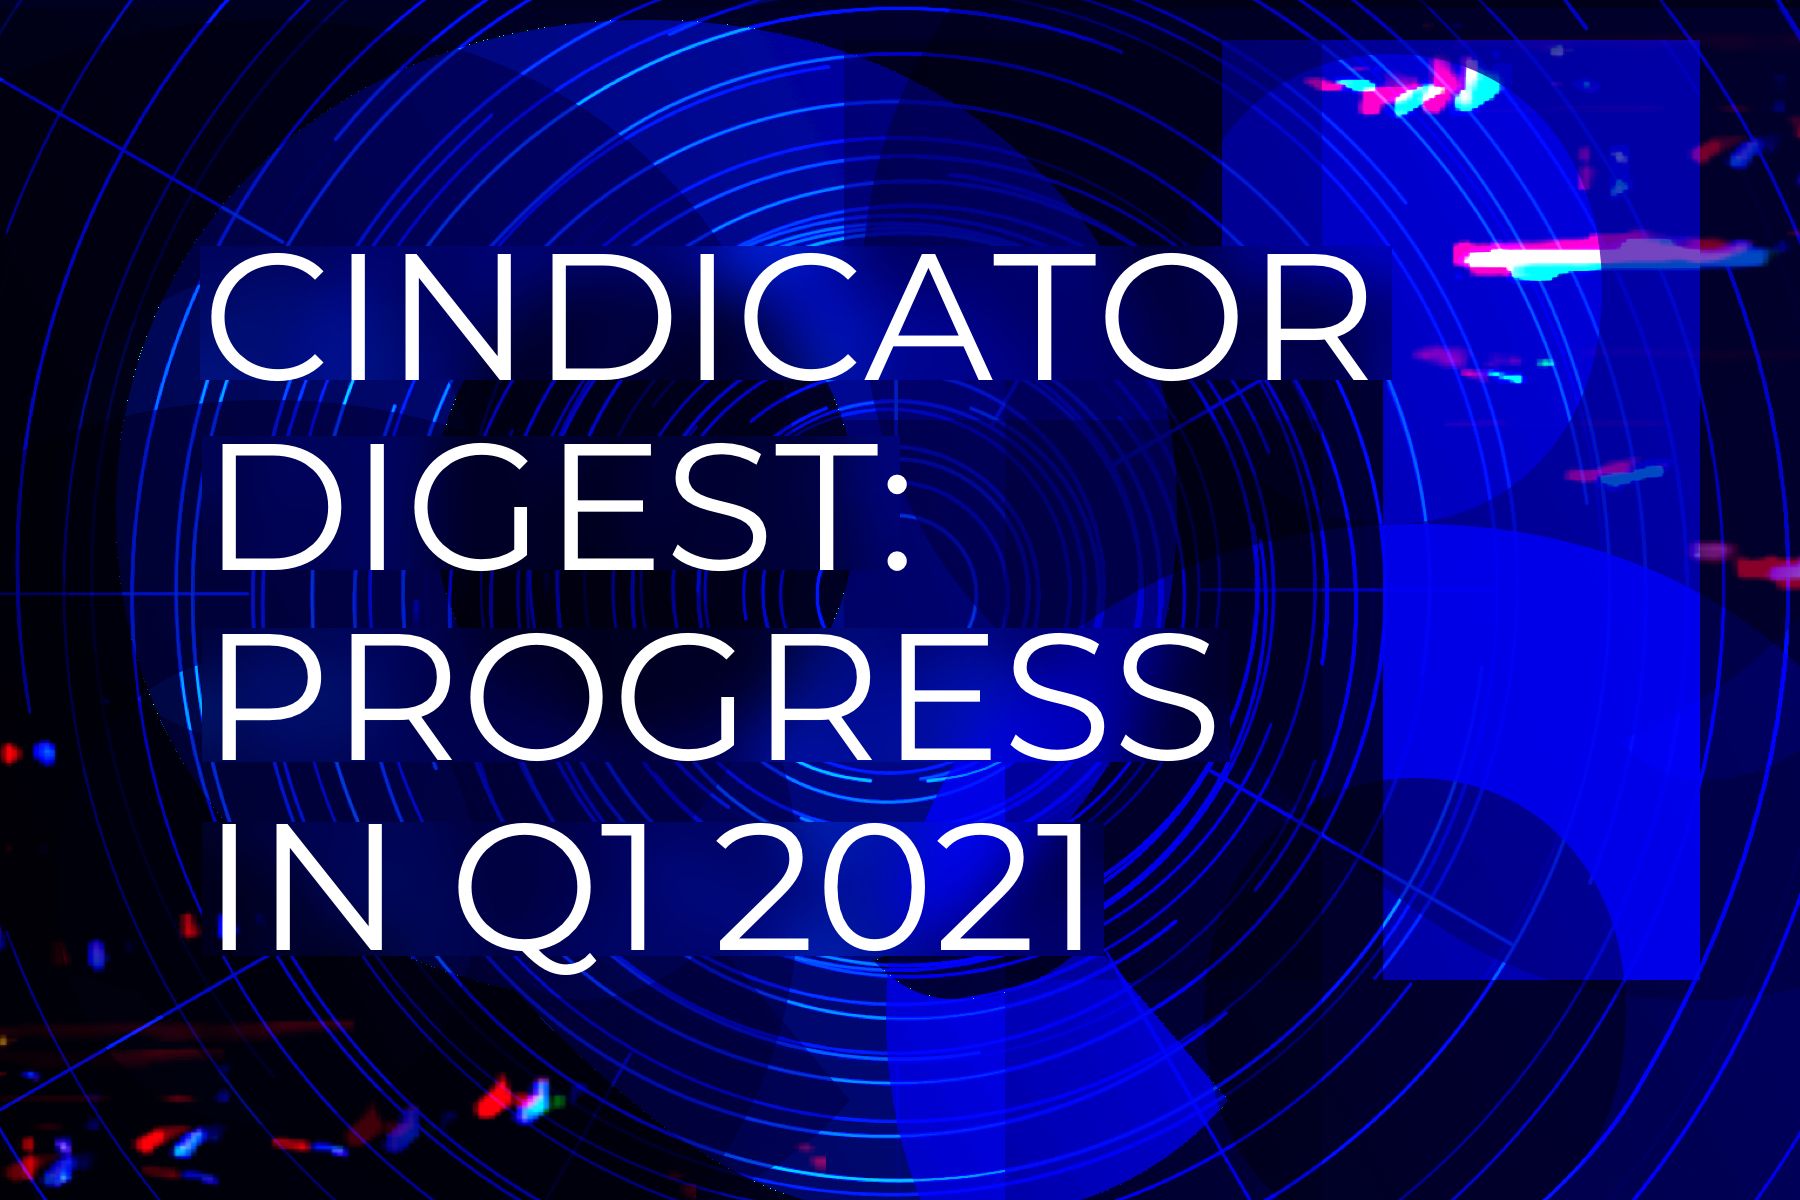 Cindicator Digest: Progress in Q1 2021